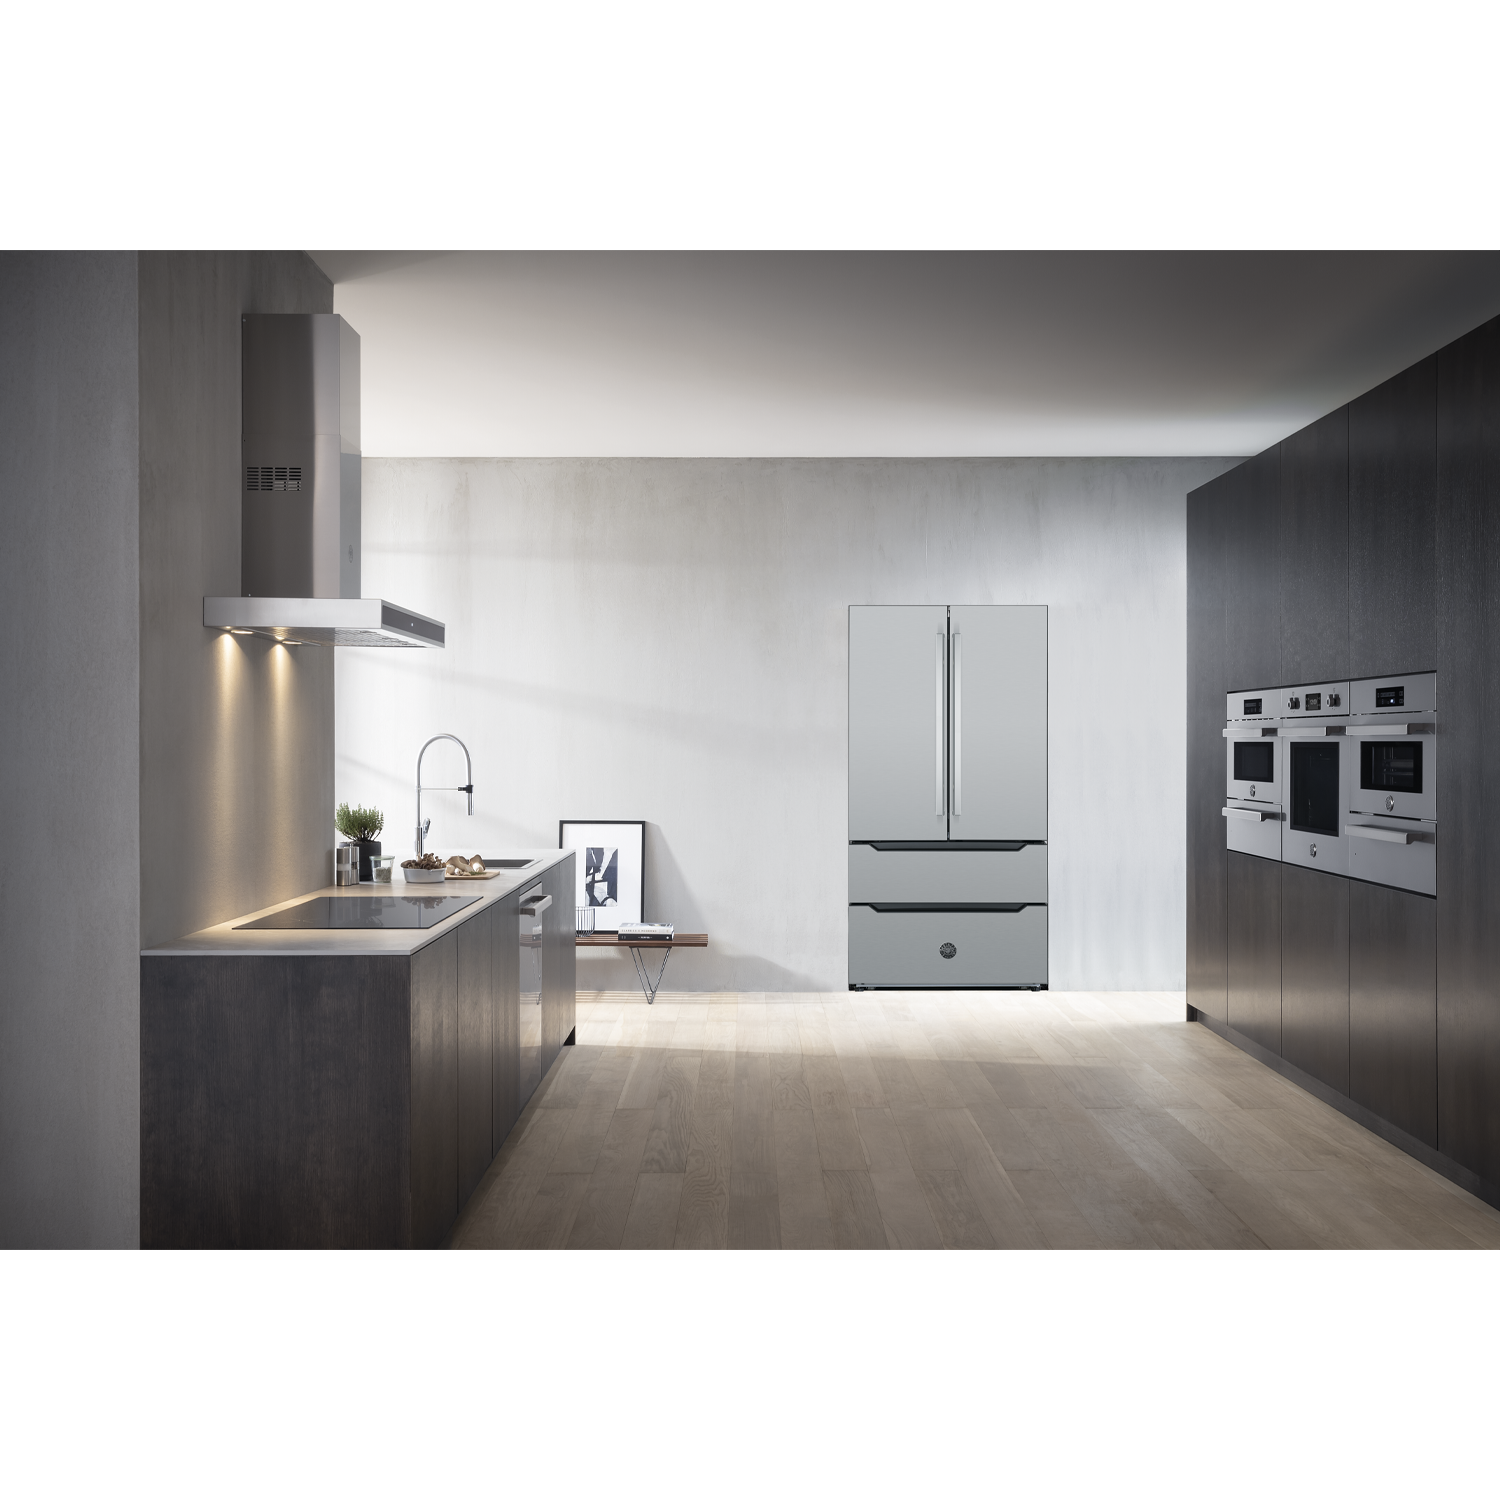 refrigerador-frenchdoor-bertazzoni-professional-91cm-636l-ambientada3